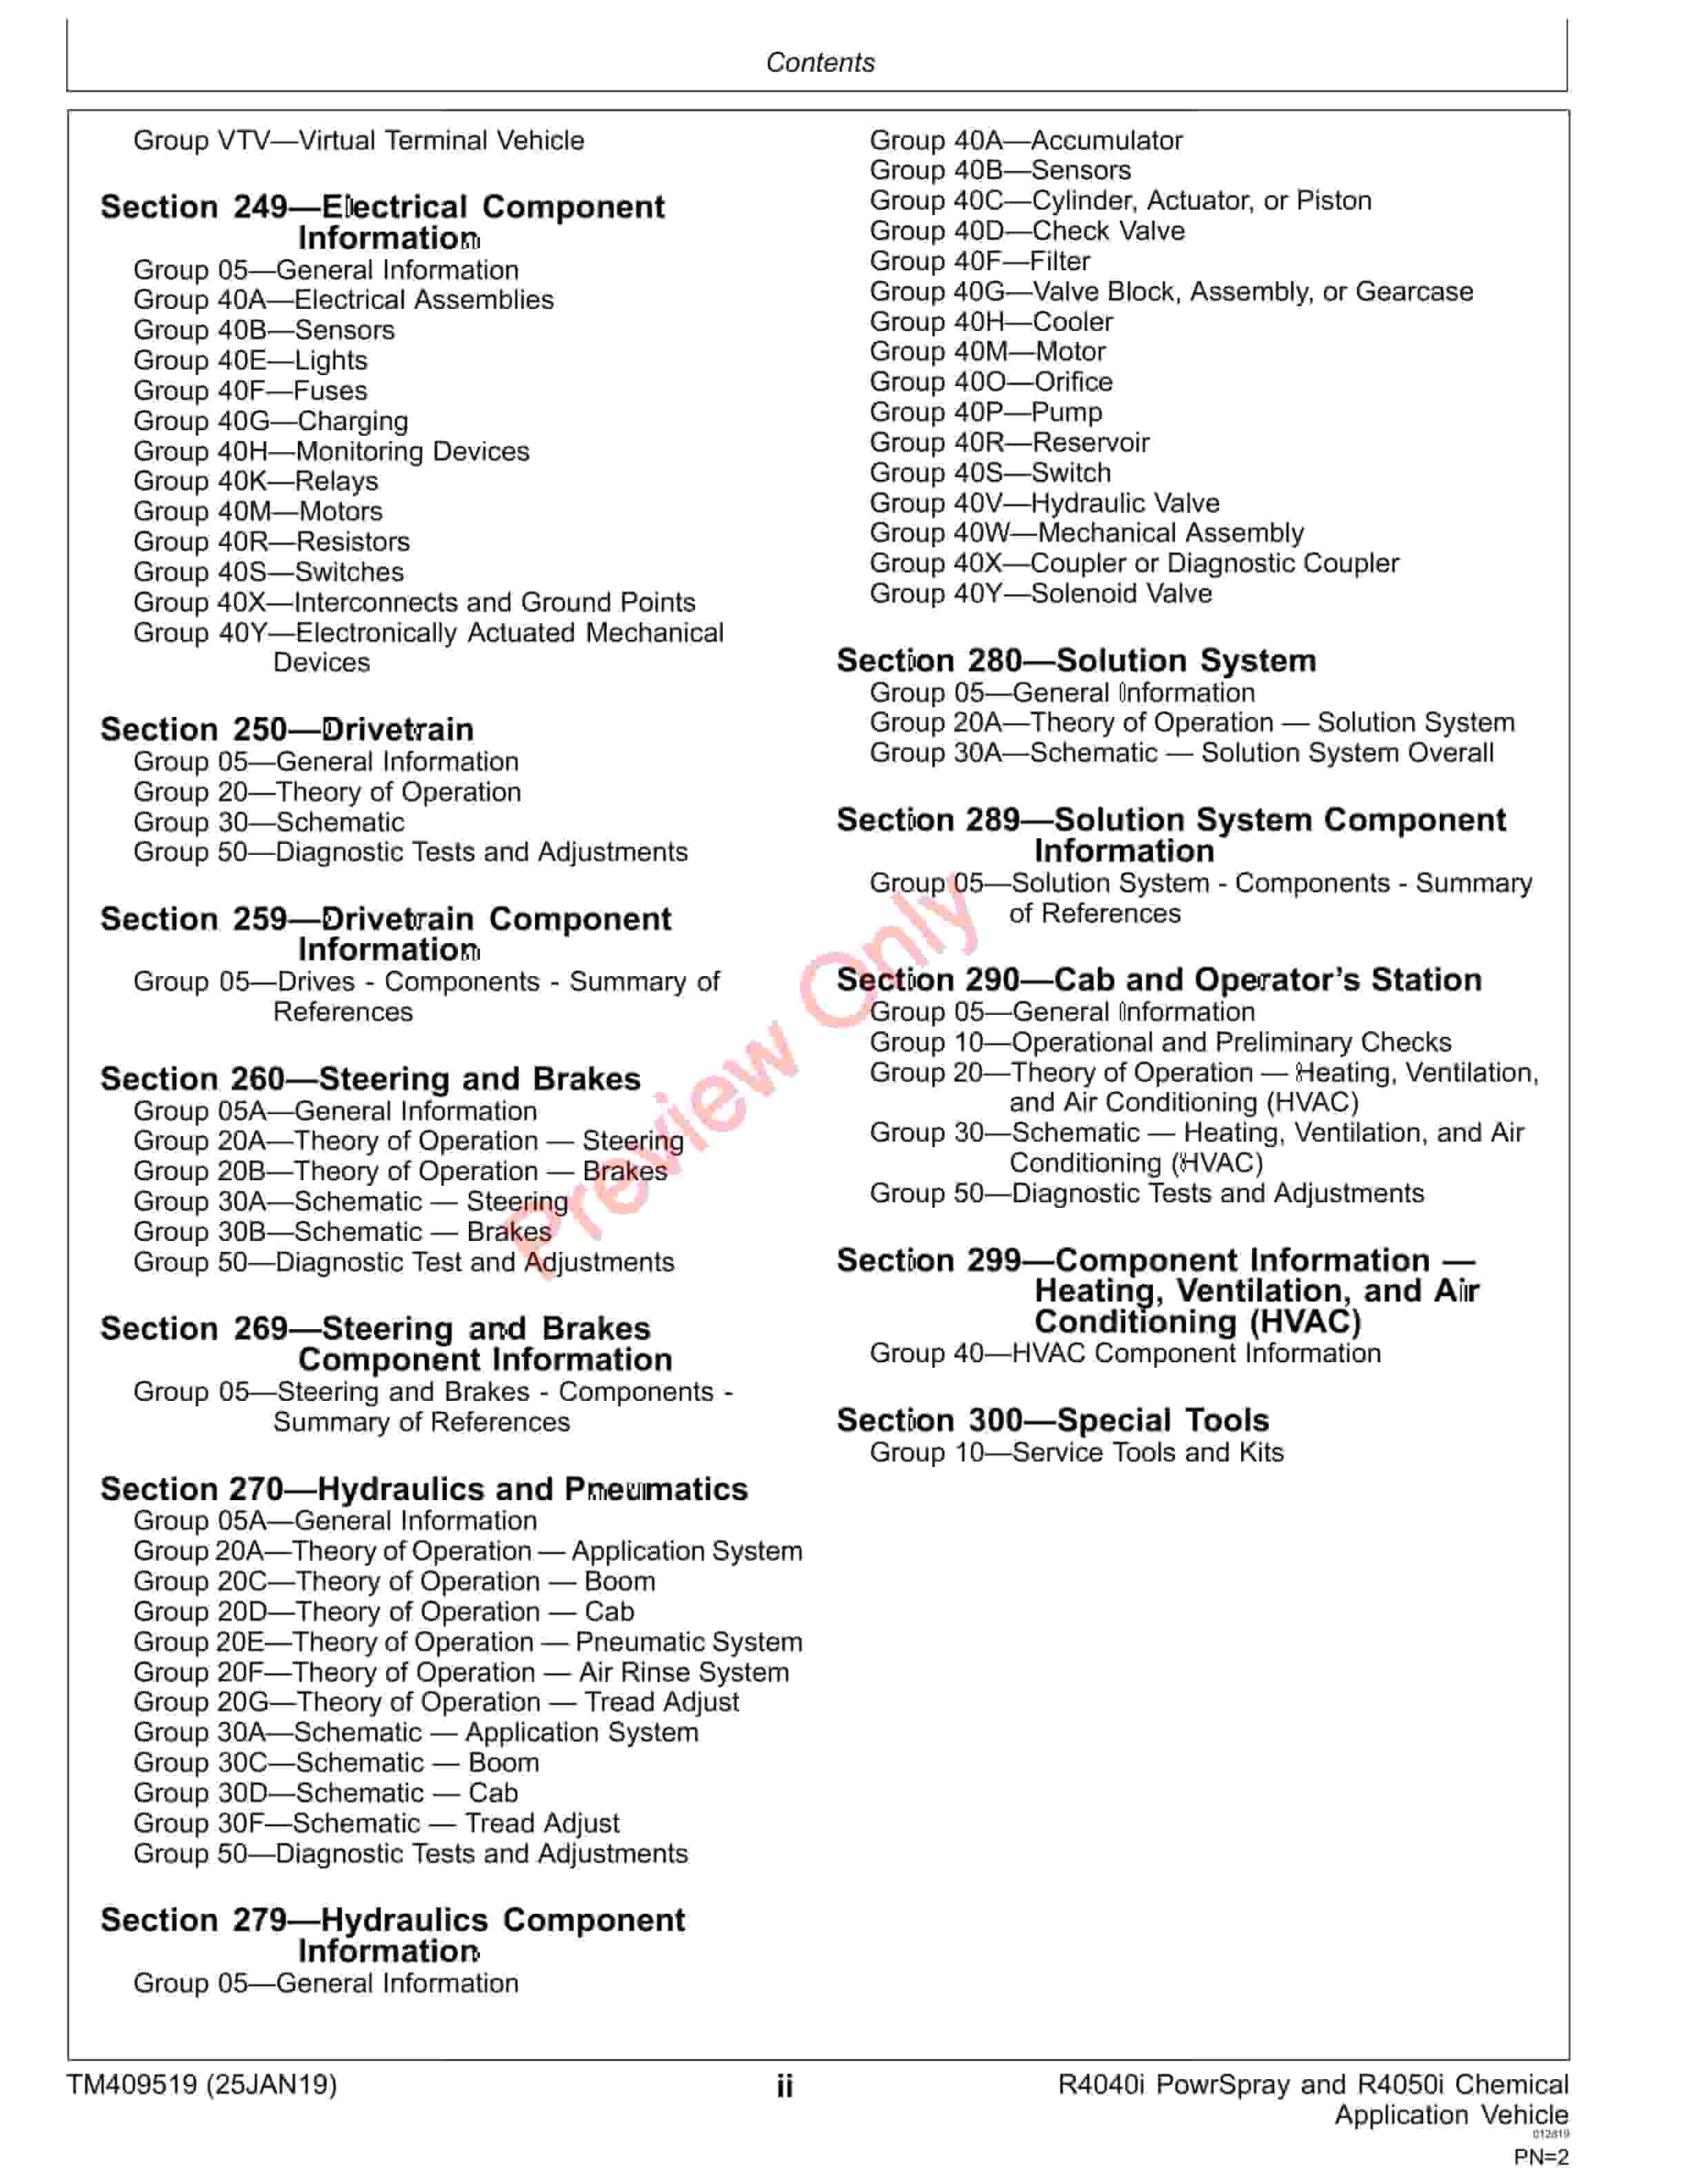 John Deere R4040i PowrSpray And R4050i Chemical ApplicationVehicle And Demountable Crop Sprayers Diagnostic Technical Manual TM409519 25JAN19 4